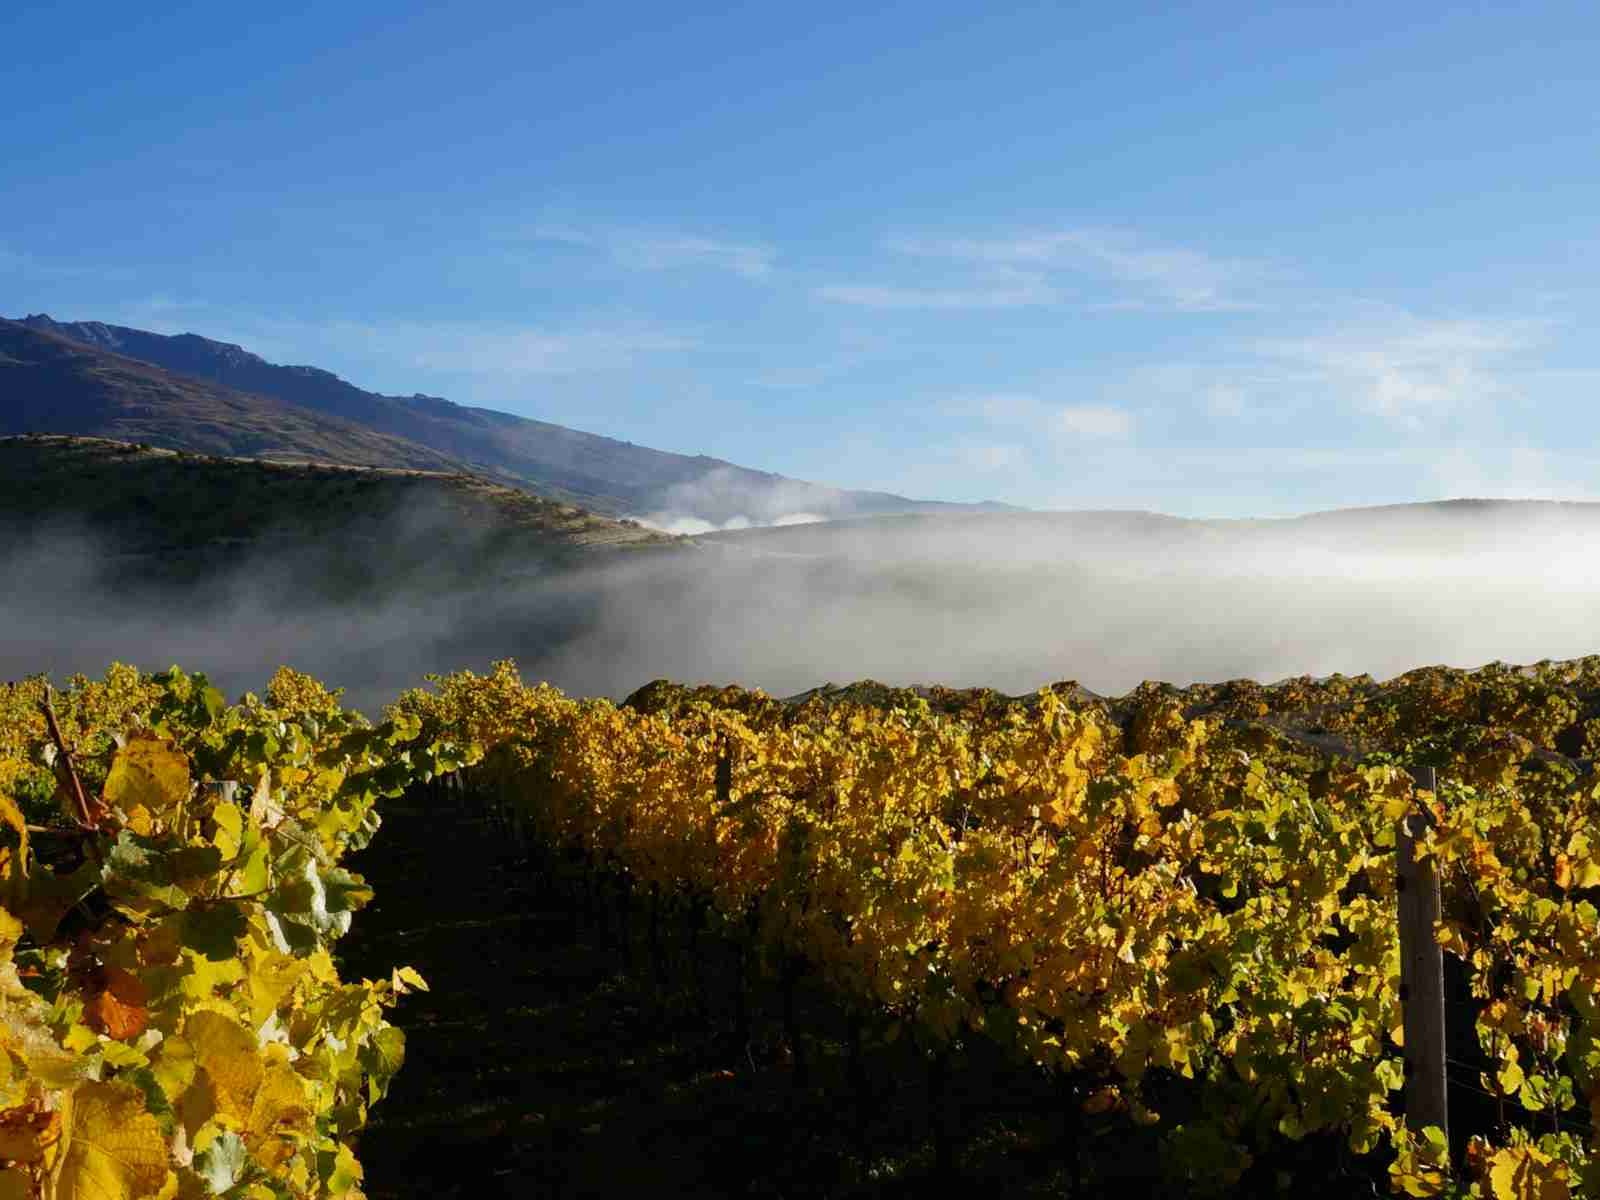 Morning mist in a central Otago Pinot Noir vineyard.